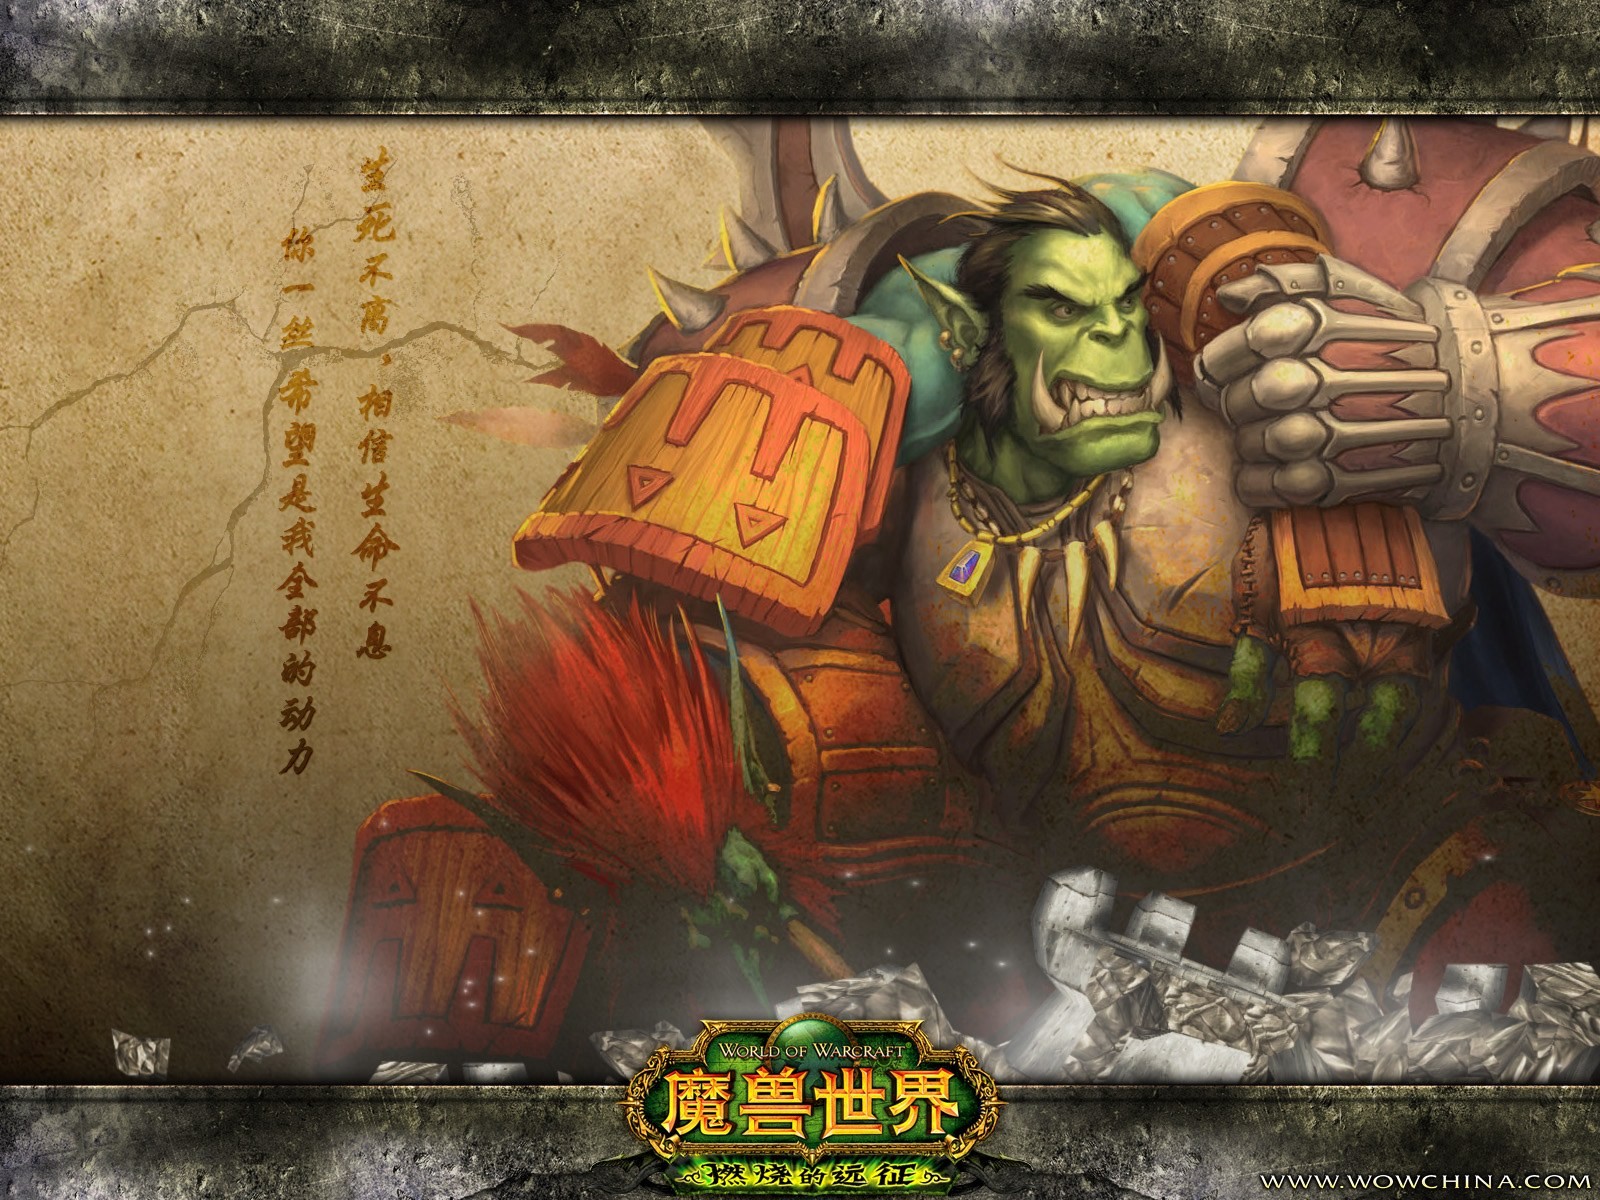 World of Warcraft: Fond d'écran officiel de Burning Crusade (2) #20 - 1600x1200